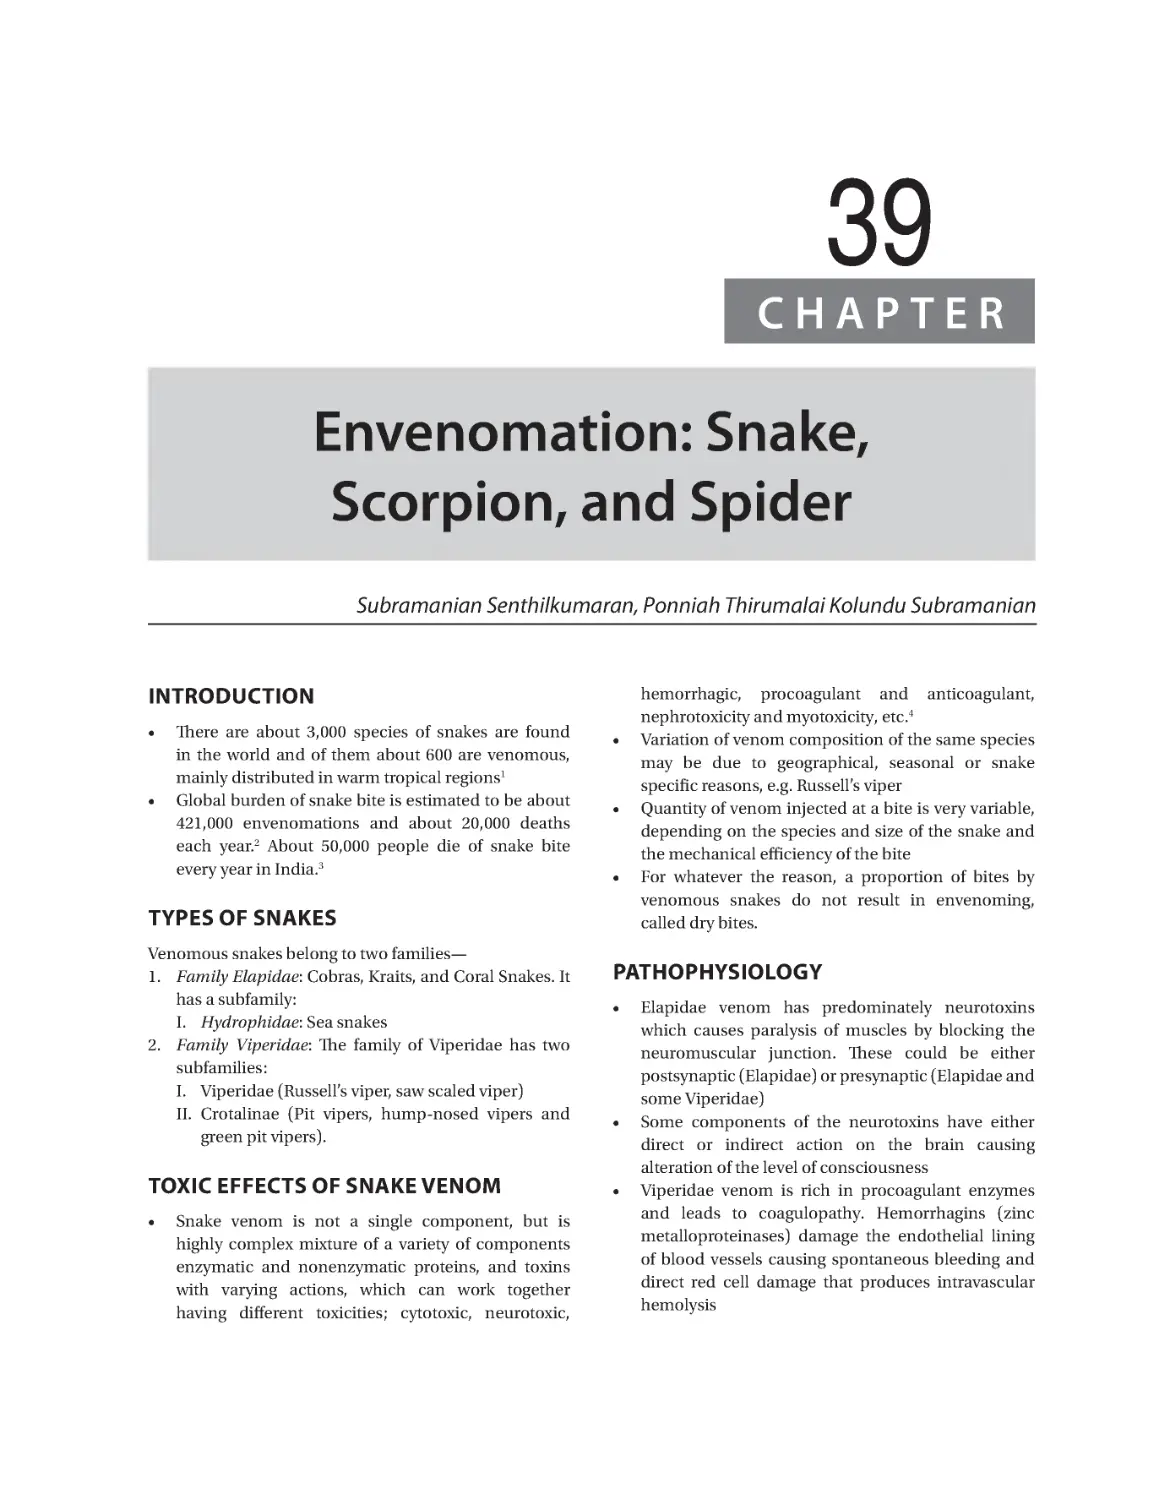 Chapter 39: Envenomation: Snake,Scorpion, and Spider